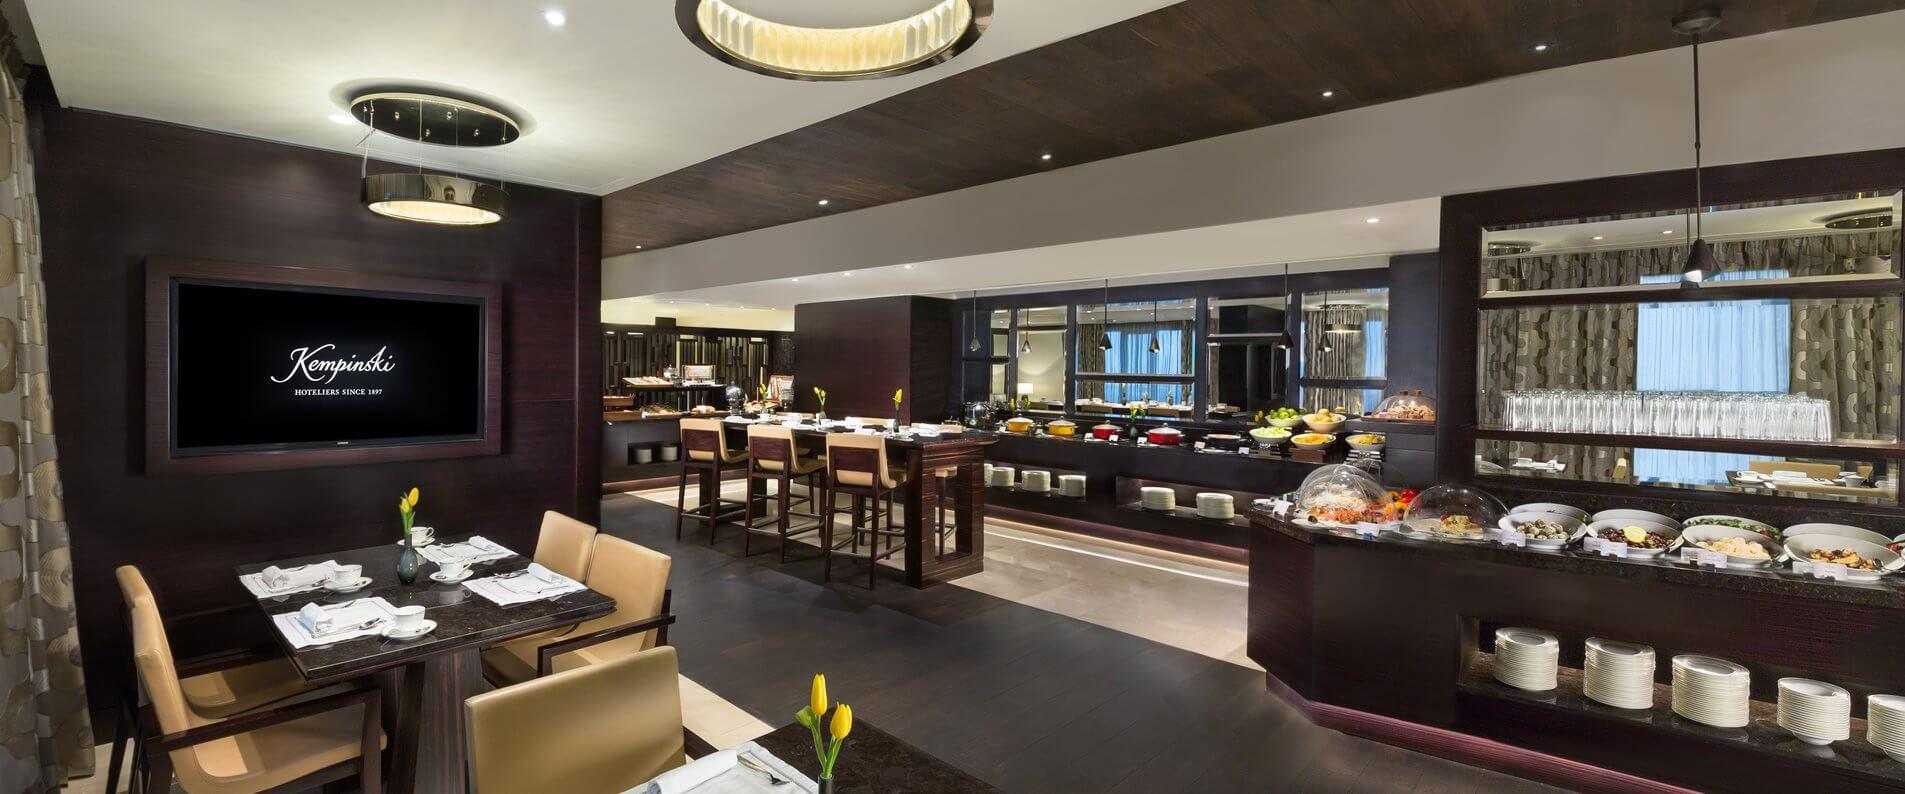 Kempinski Hotel Mall of the Emirates Executive Club Lounge Dining Area